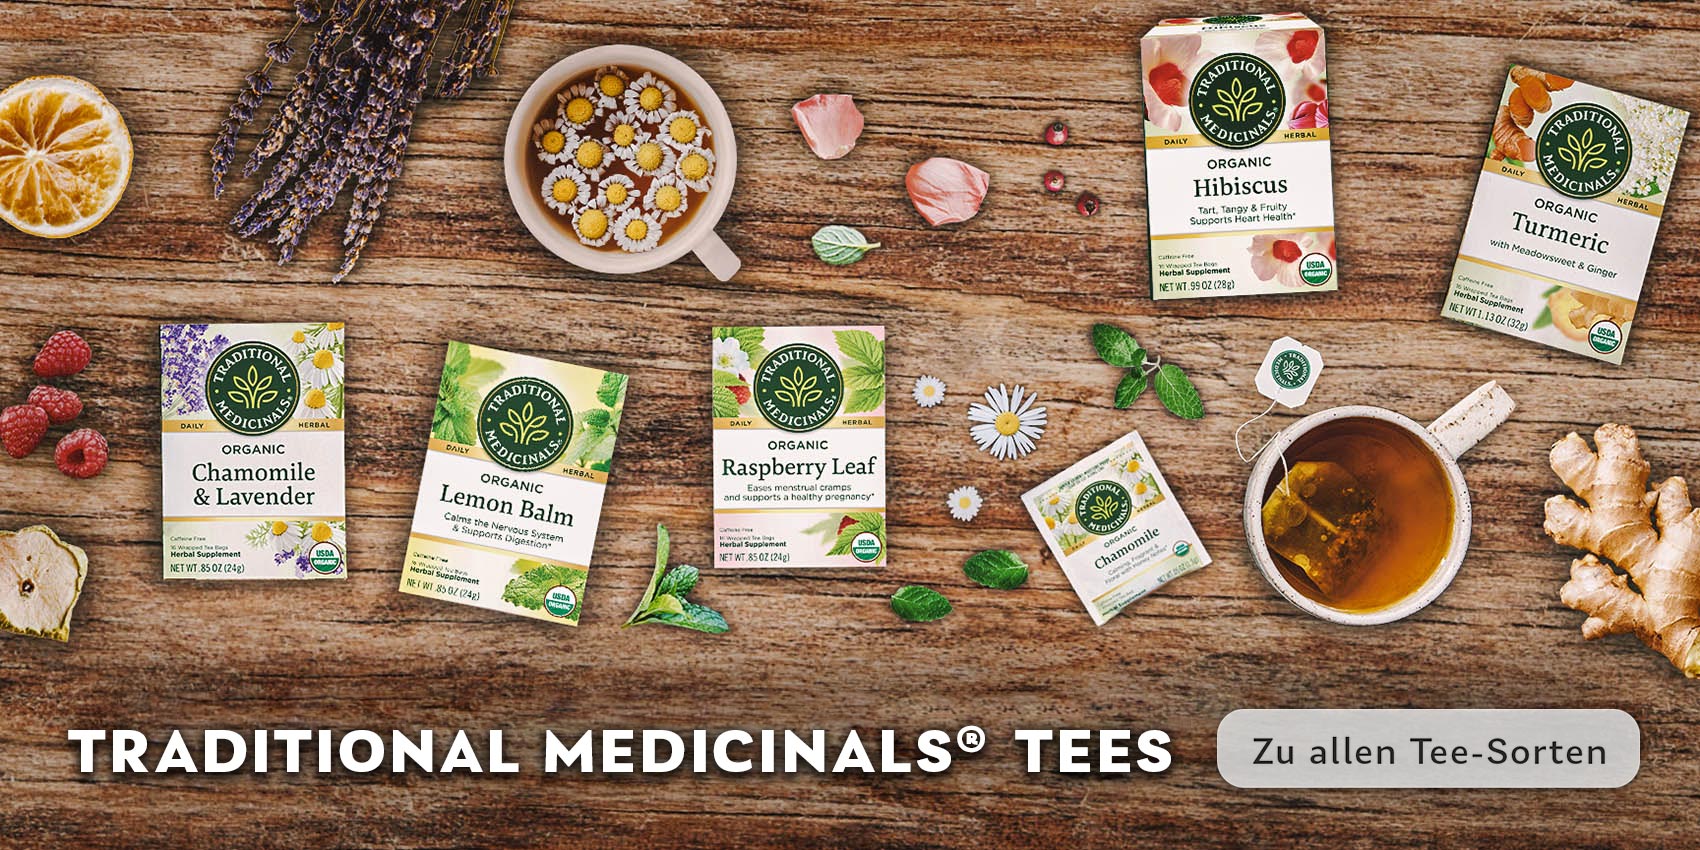 Traditional medicinal teas